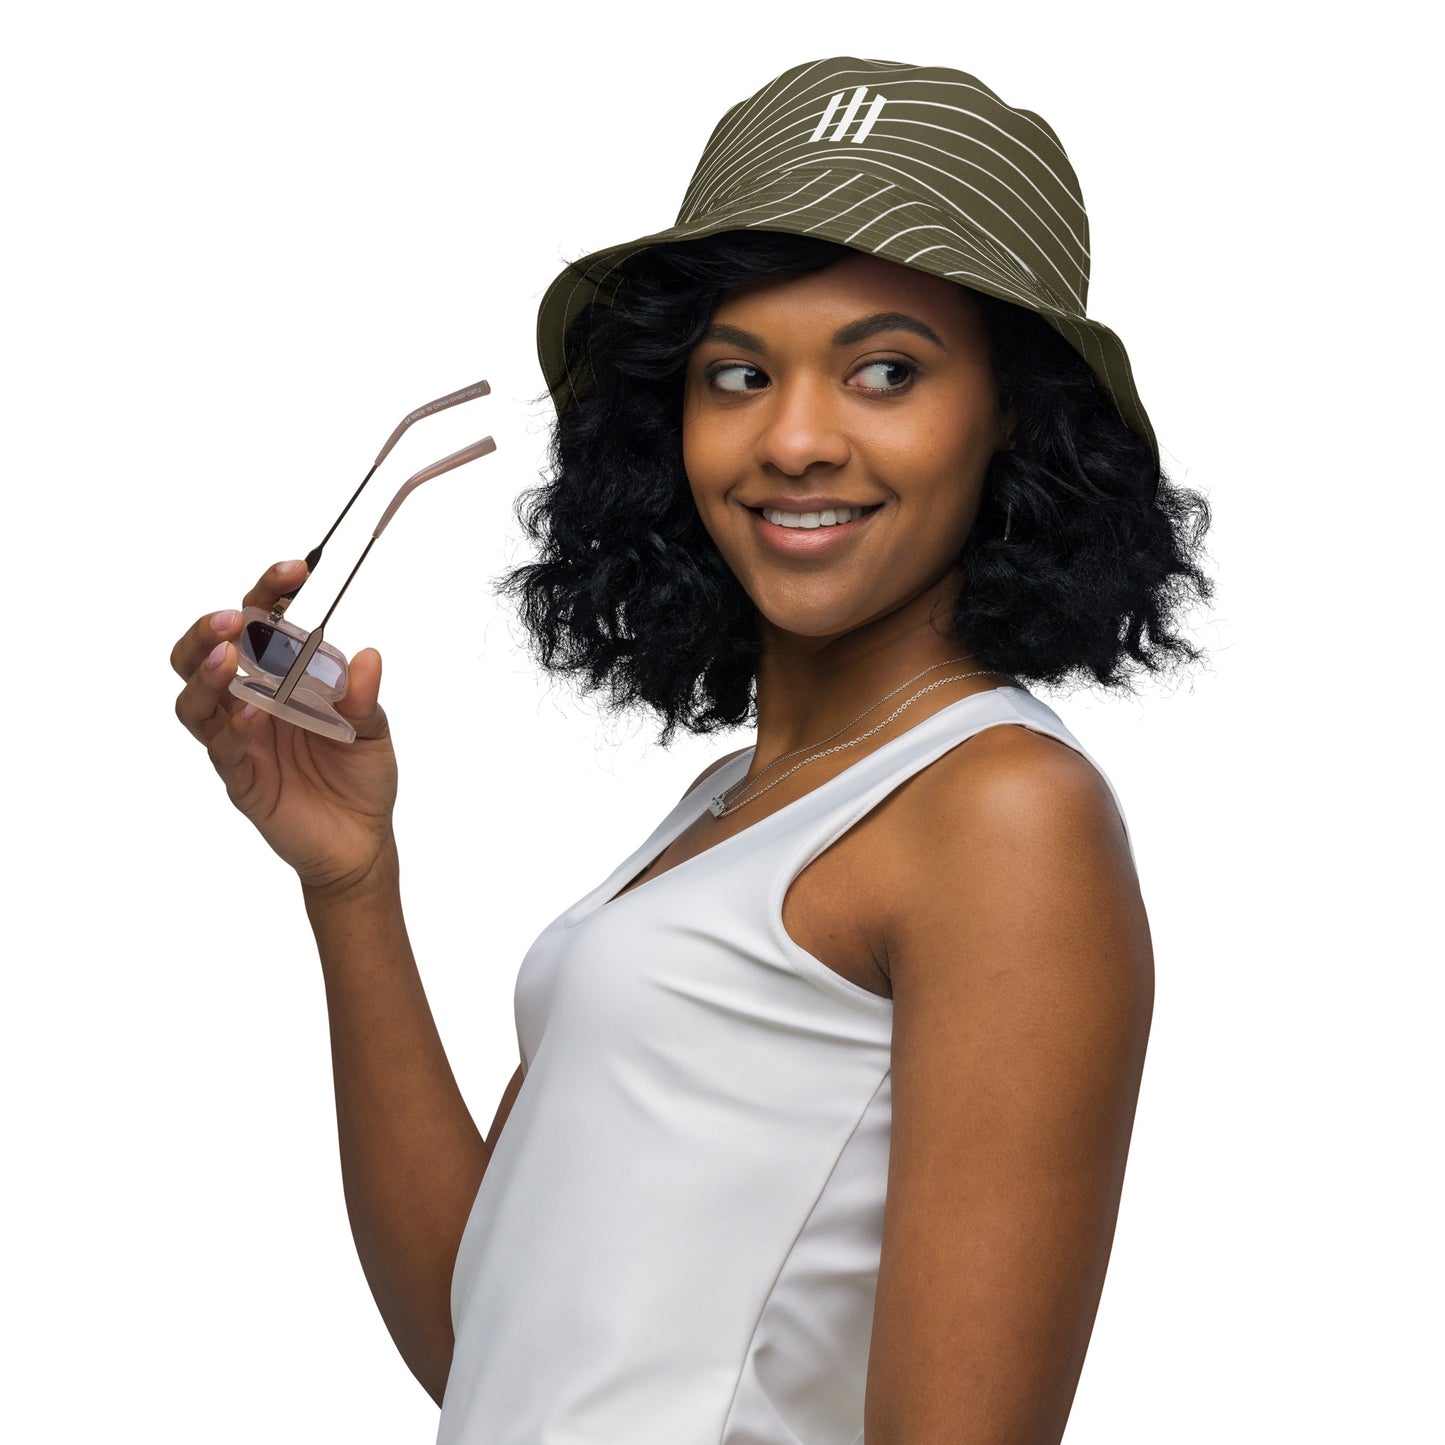 PIH Reversible Bucket Hat - Military Green